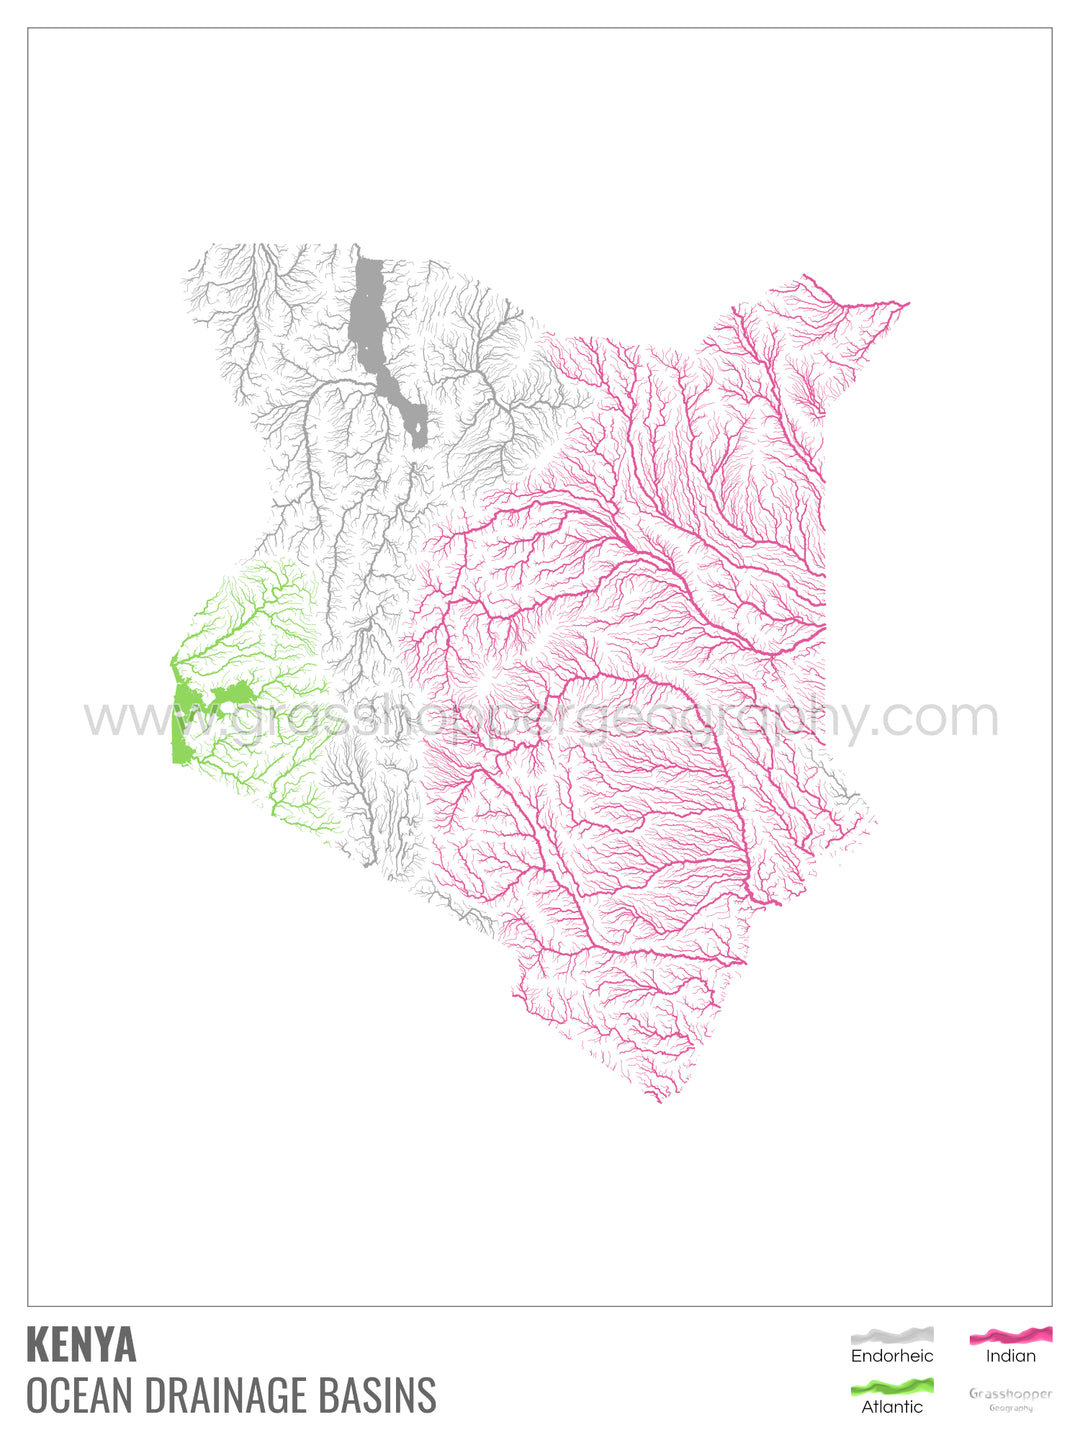 Kenya - Carte du bassin versant océanique, blanche avec légende v1 - Tirage photo artistique